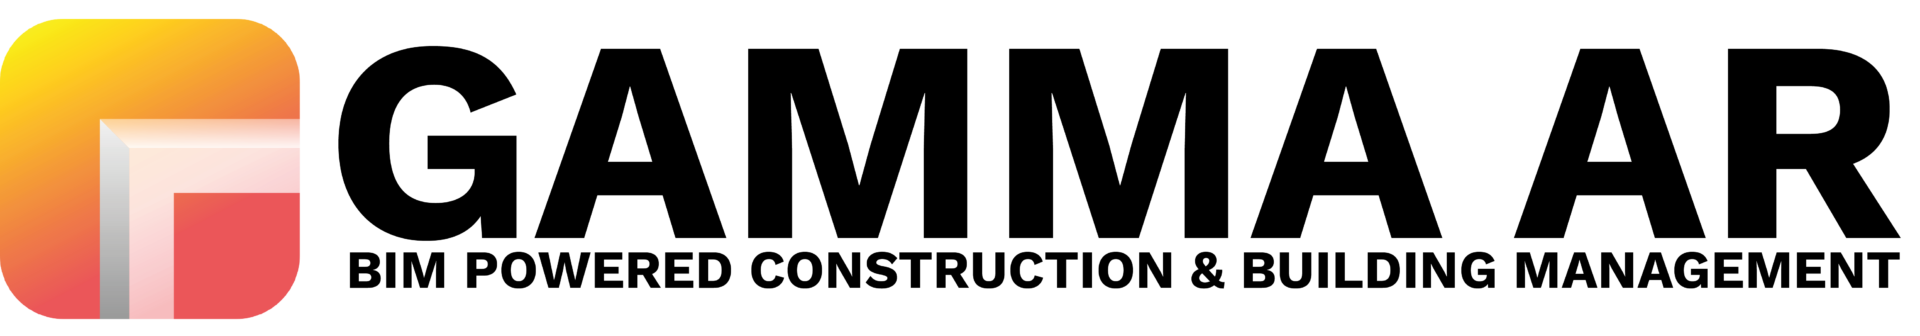 gamma-ar-full-name-logo